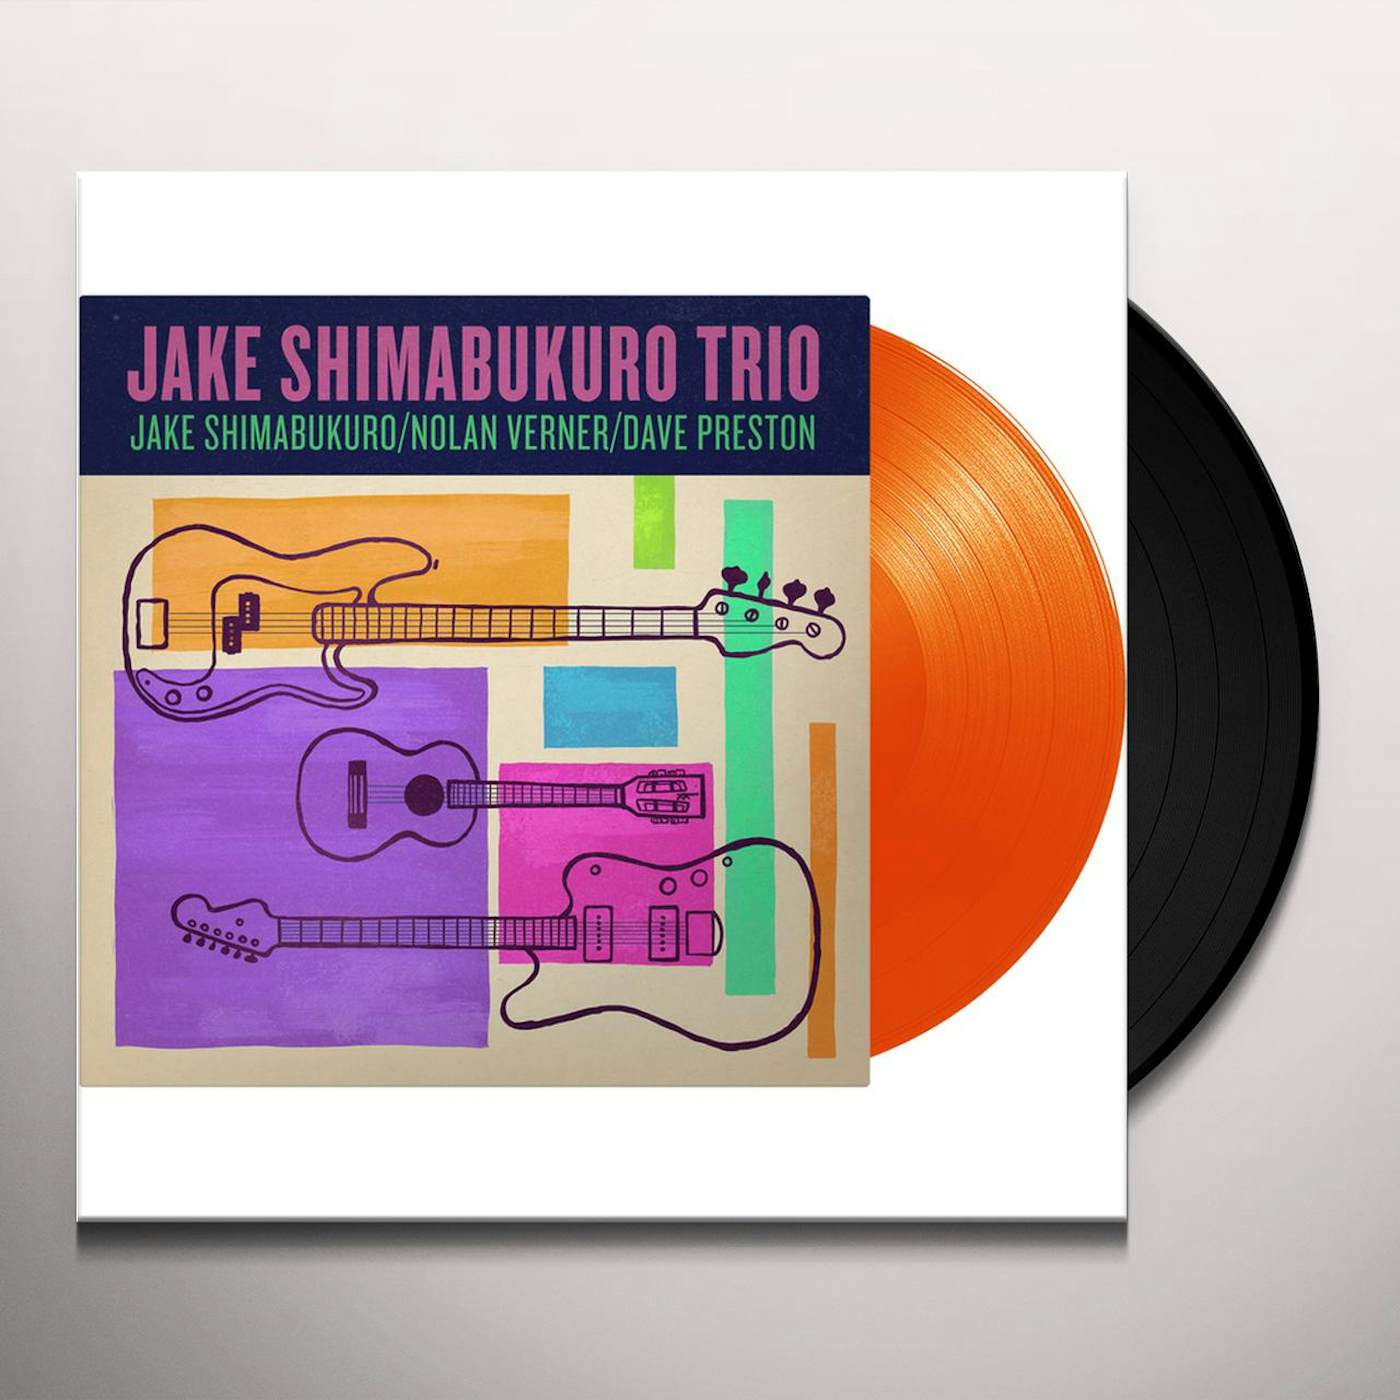 Jake Shimabukuro / Nolan Verner / Dave Preston TRIO Vinyl Record